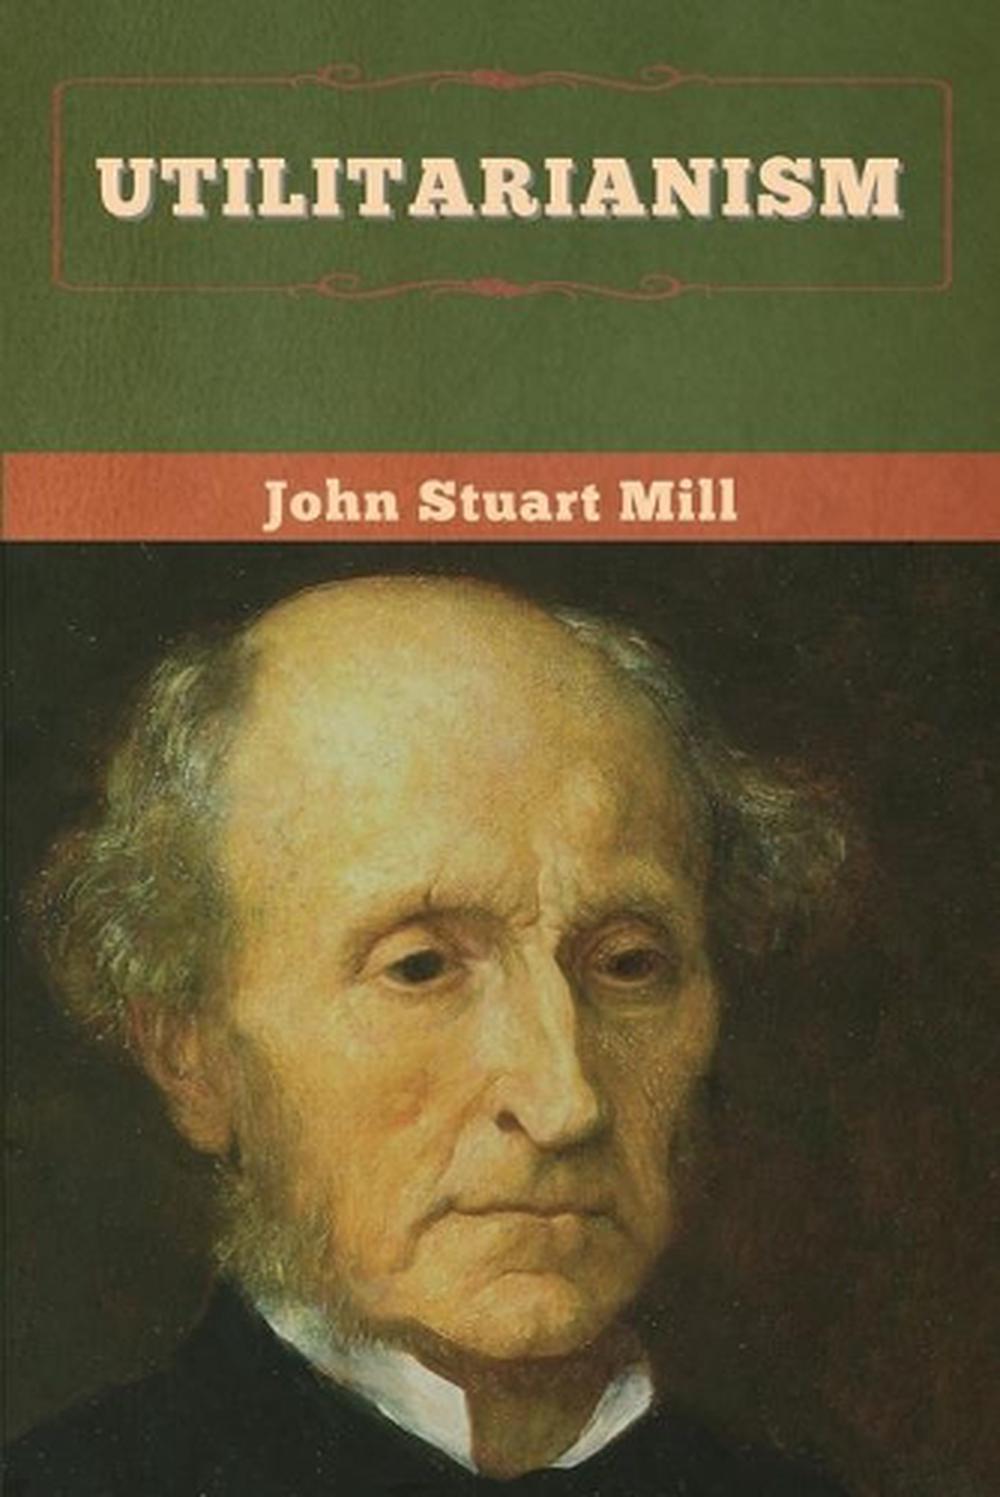 john stuart mill essay on utilitarianism